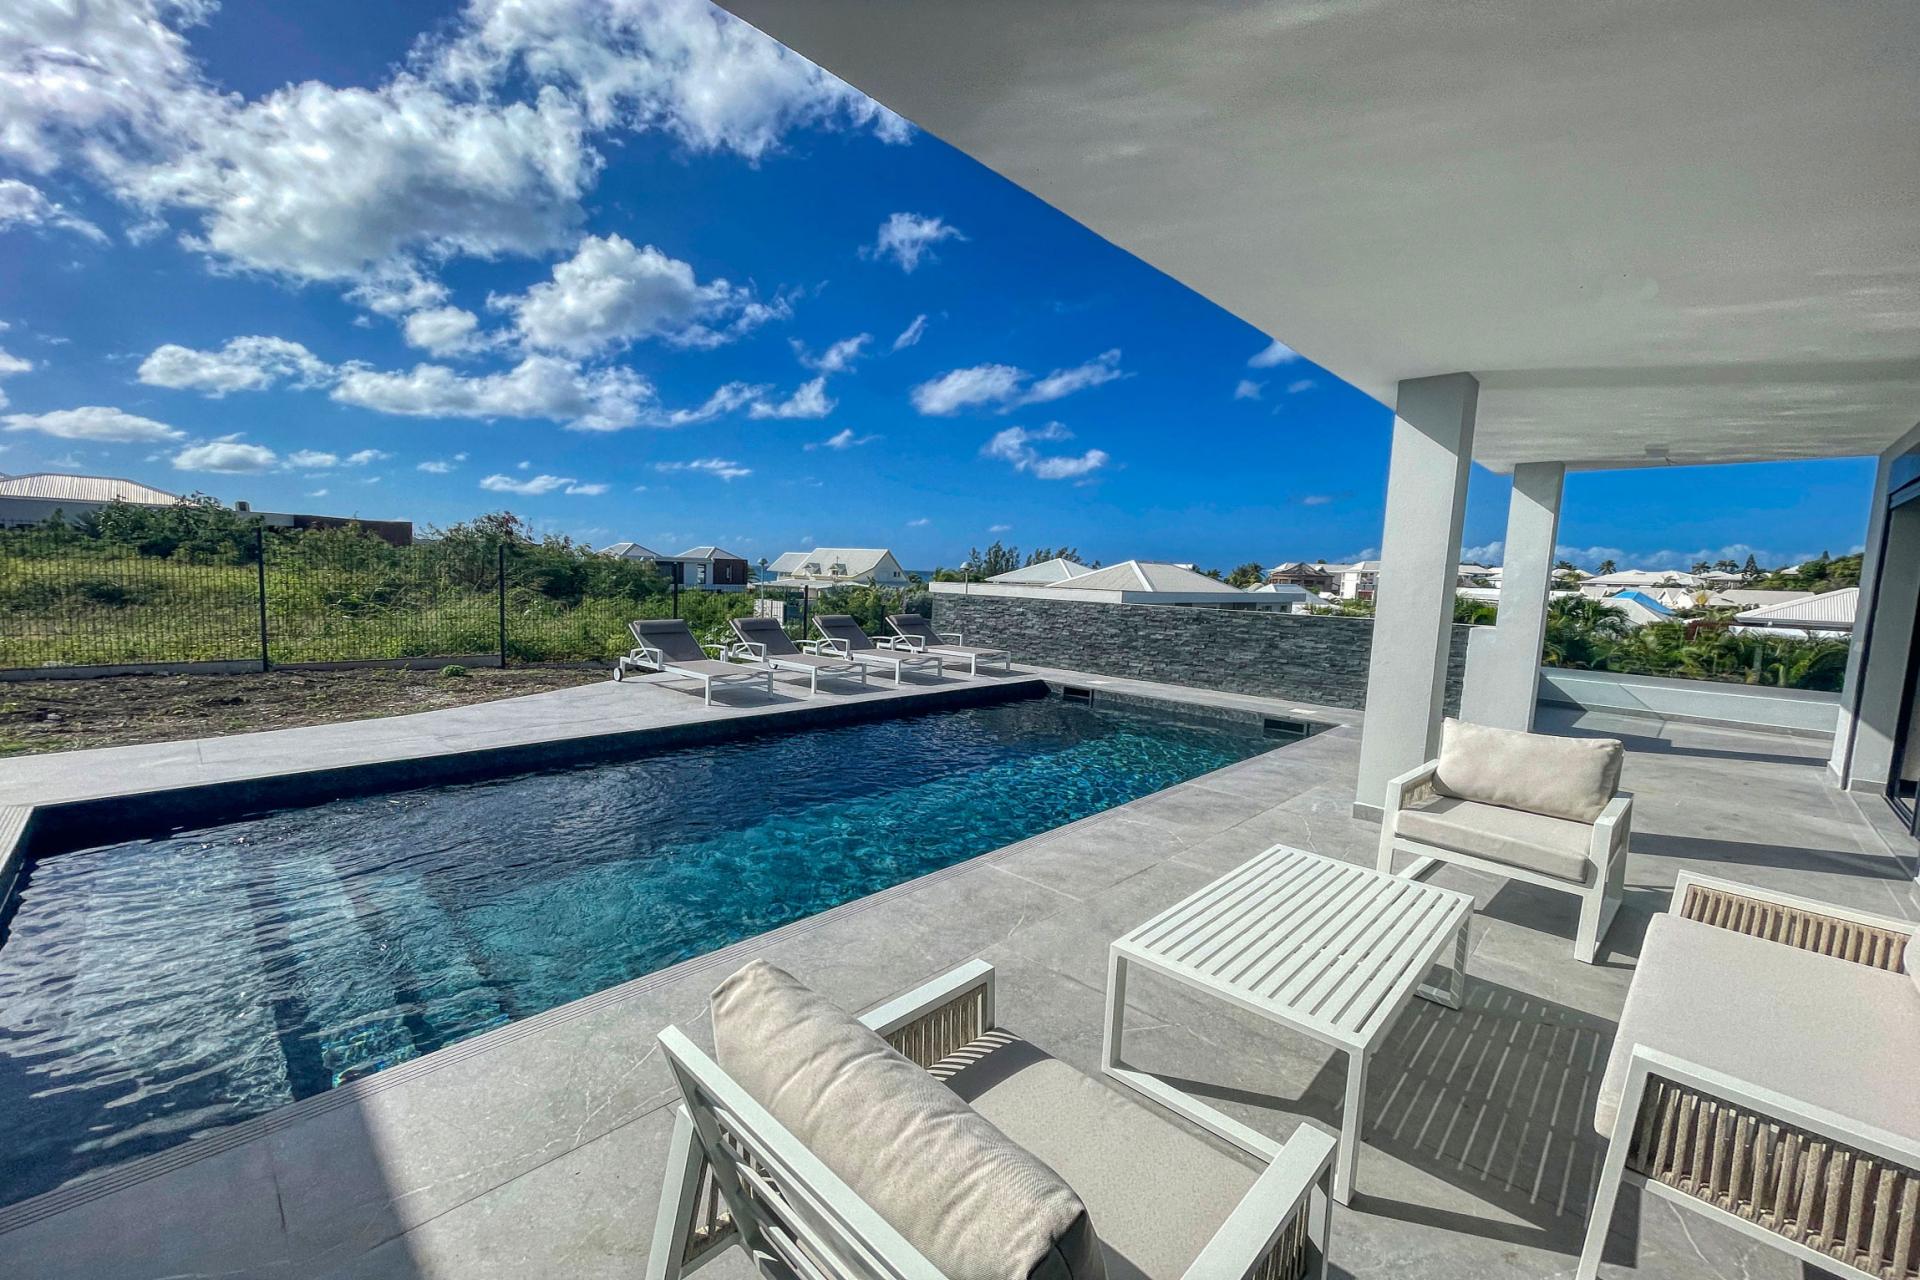 1 - Location villa avec piscine Saint François Guadeloupe - Vue mer.jpg